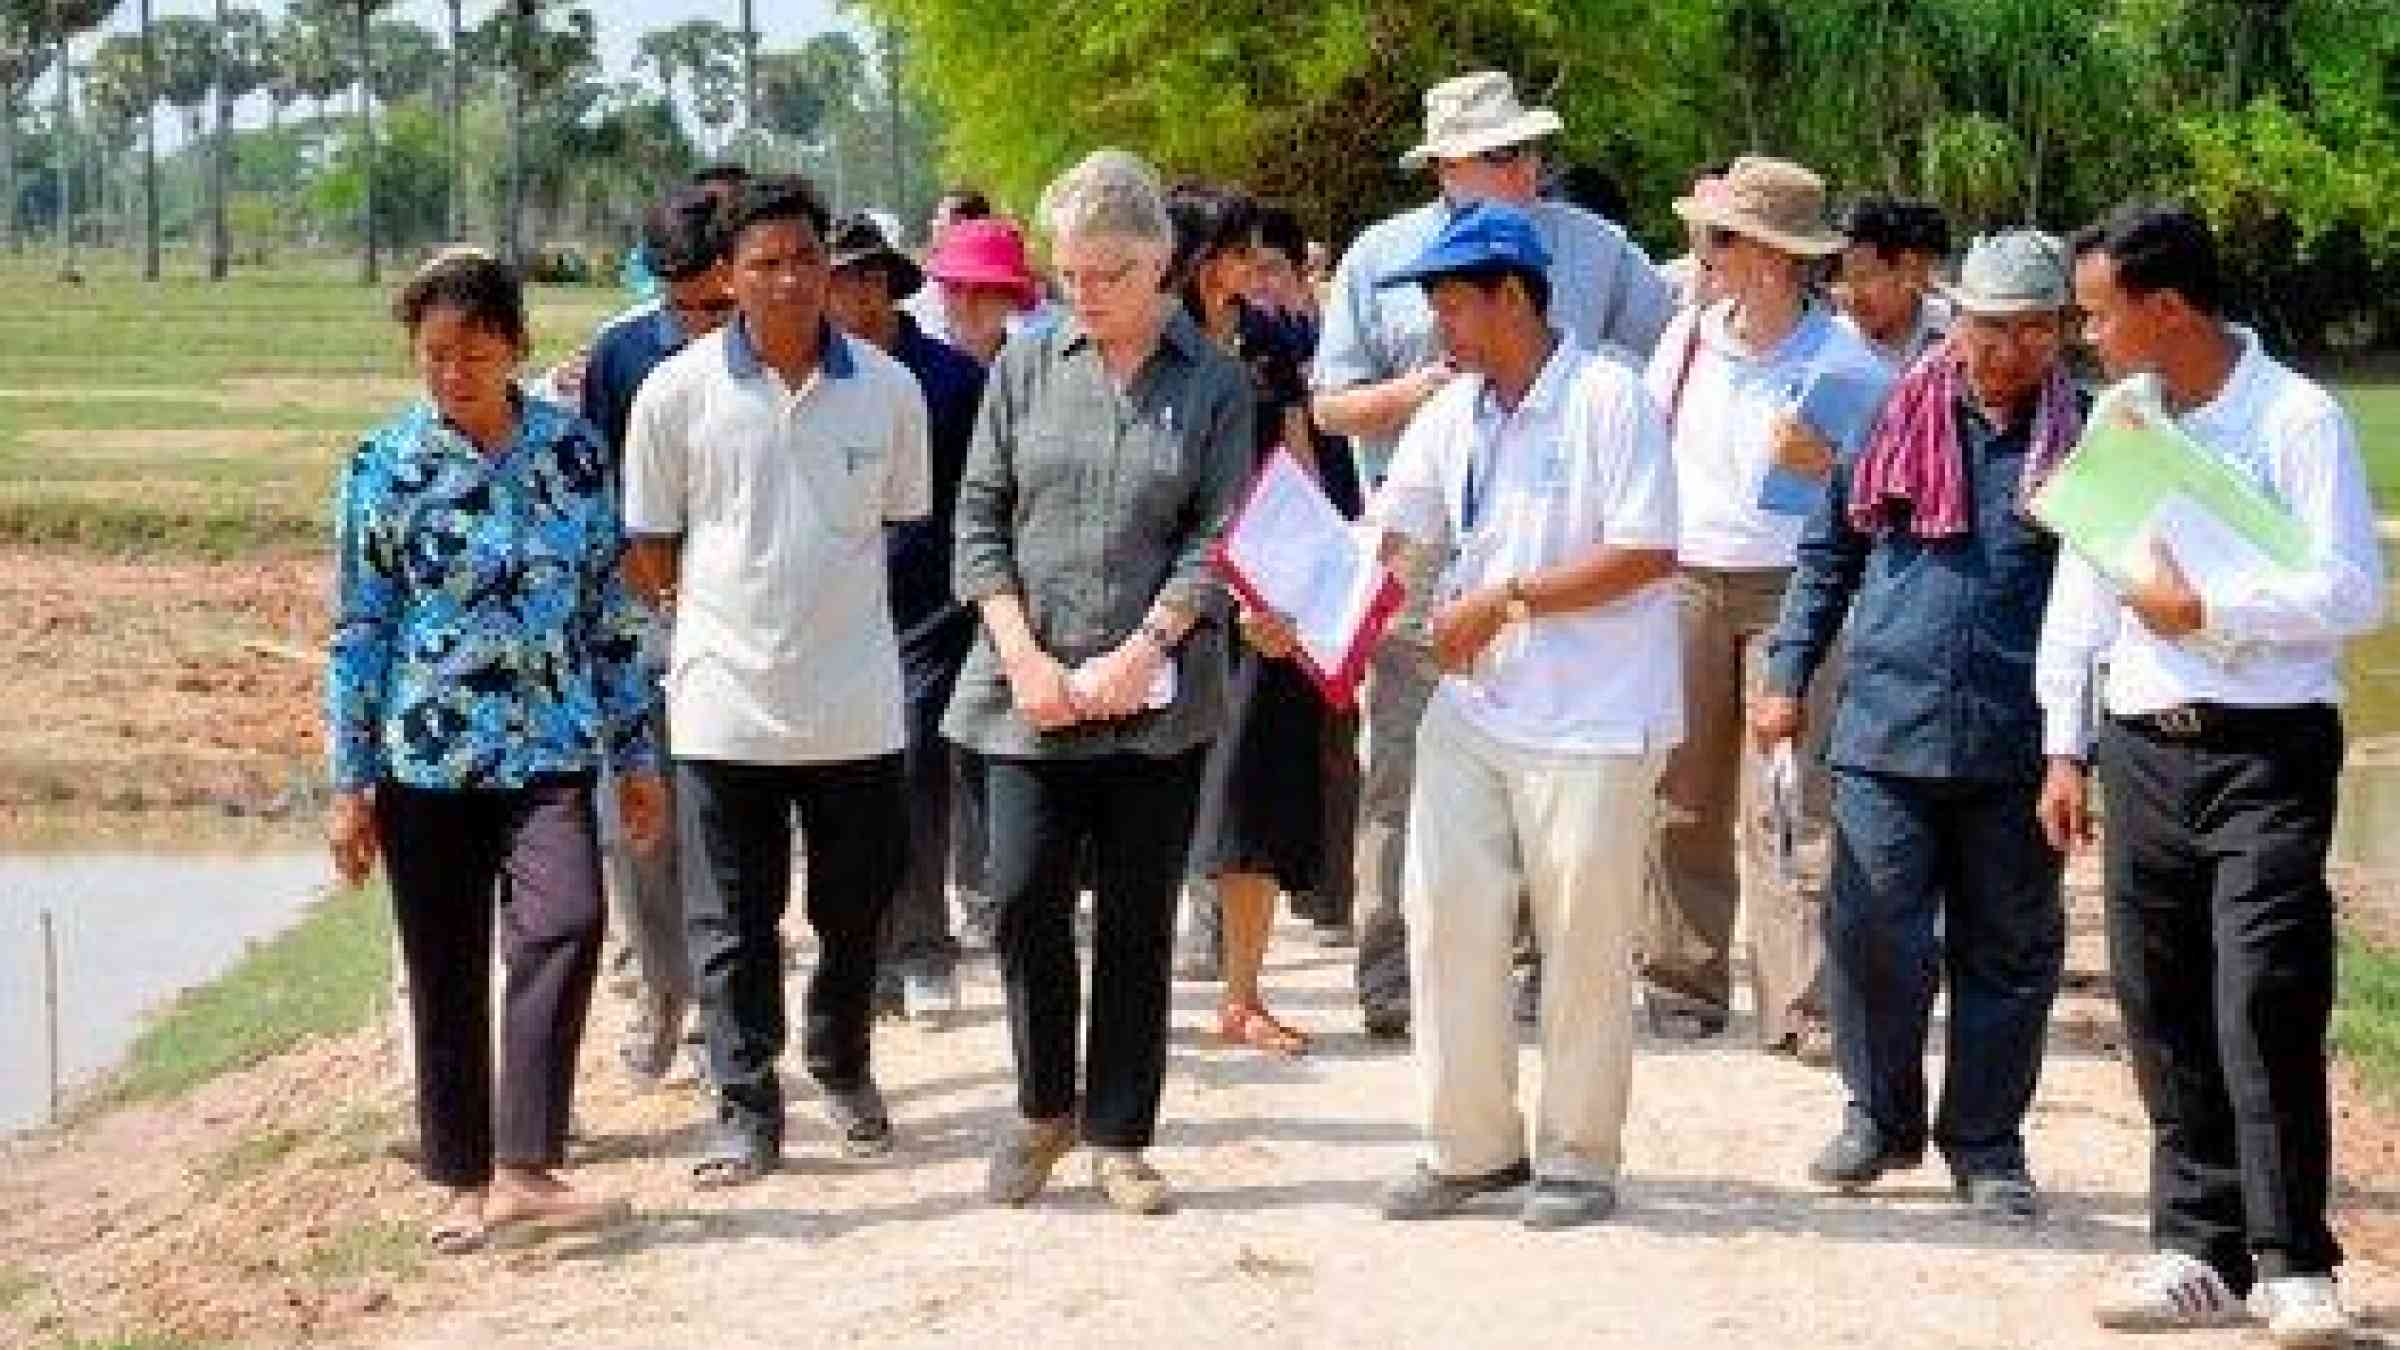 Margareta Wahlström visits community leaders in Prey Veng Town, Prey Veng Province in Cambodia (Photo: Jerry Velasquez)